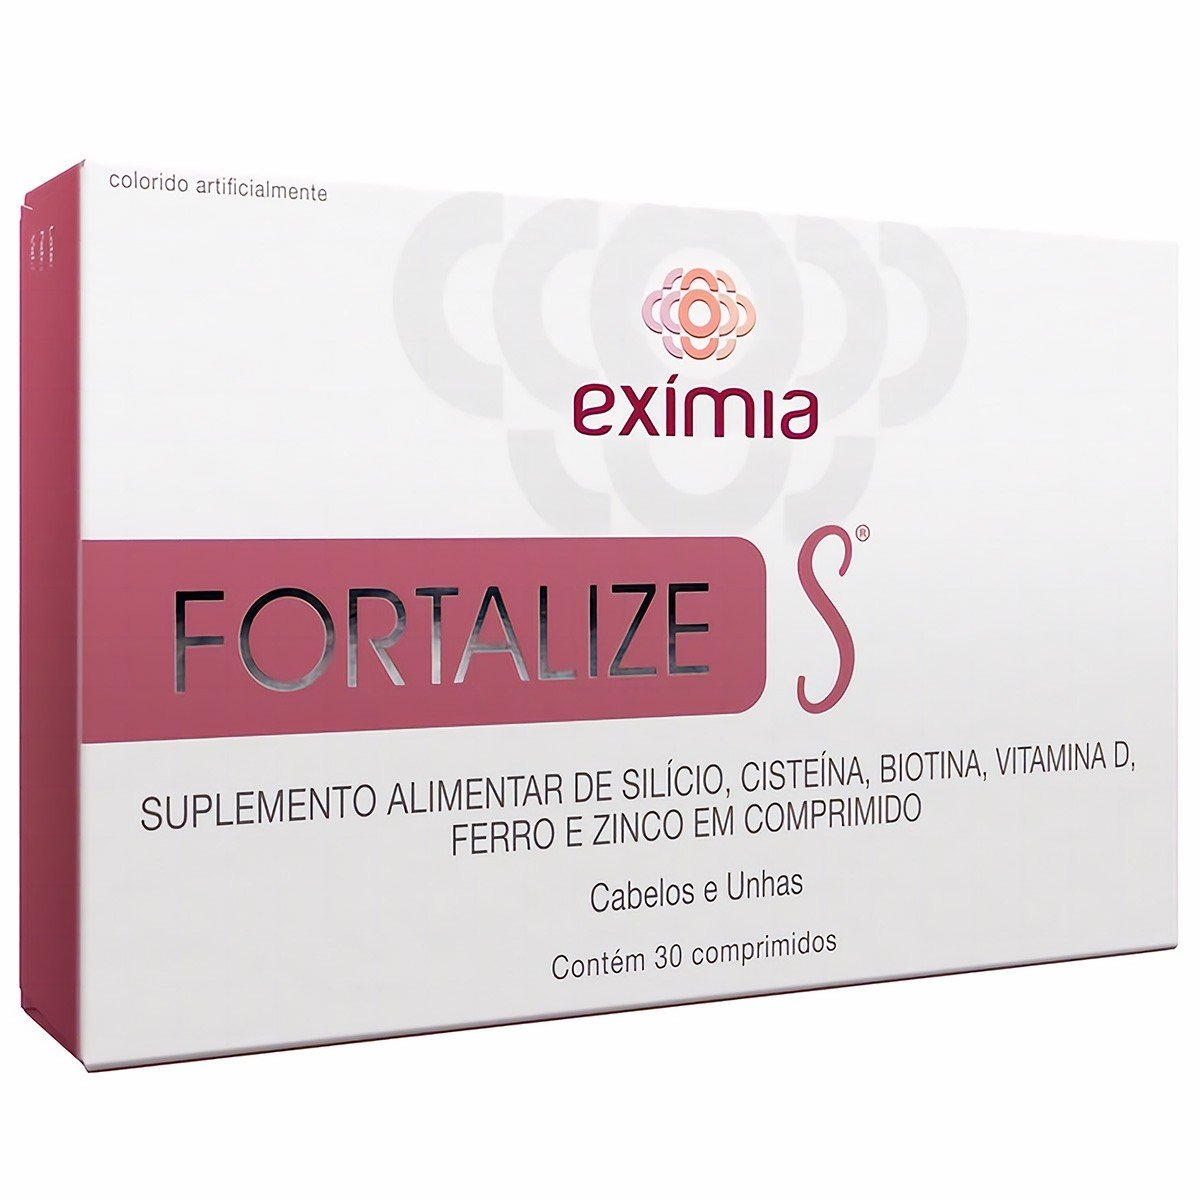 Suplemento Alimentar Eximia Fortalize S 30 Comprimidos